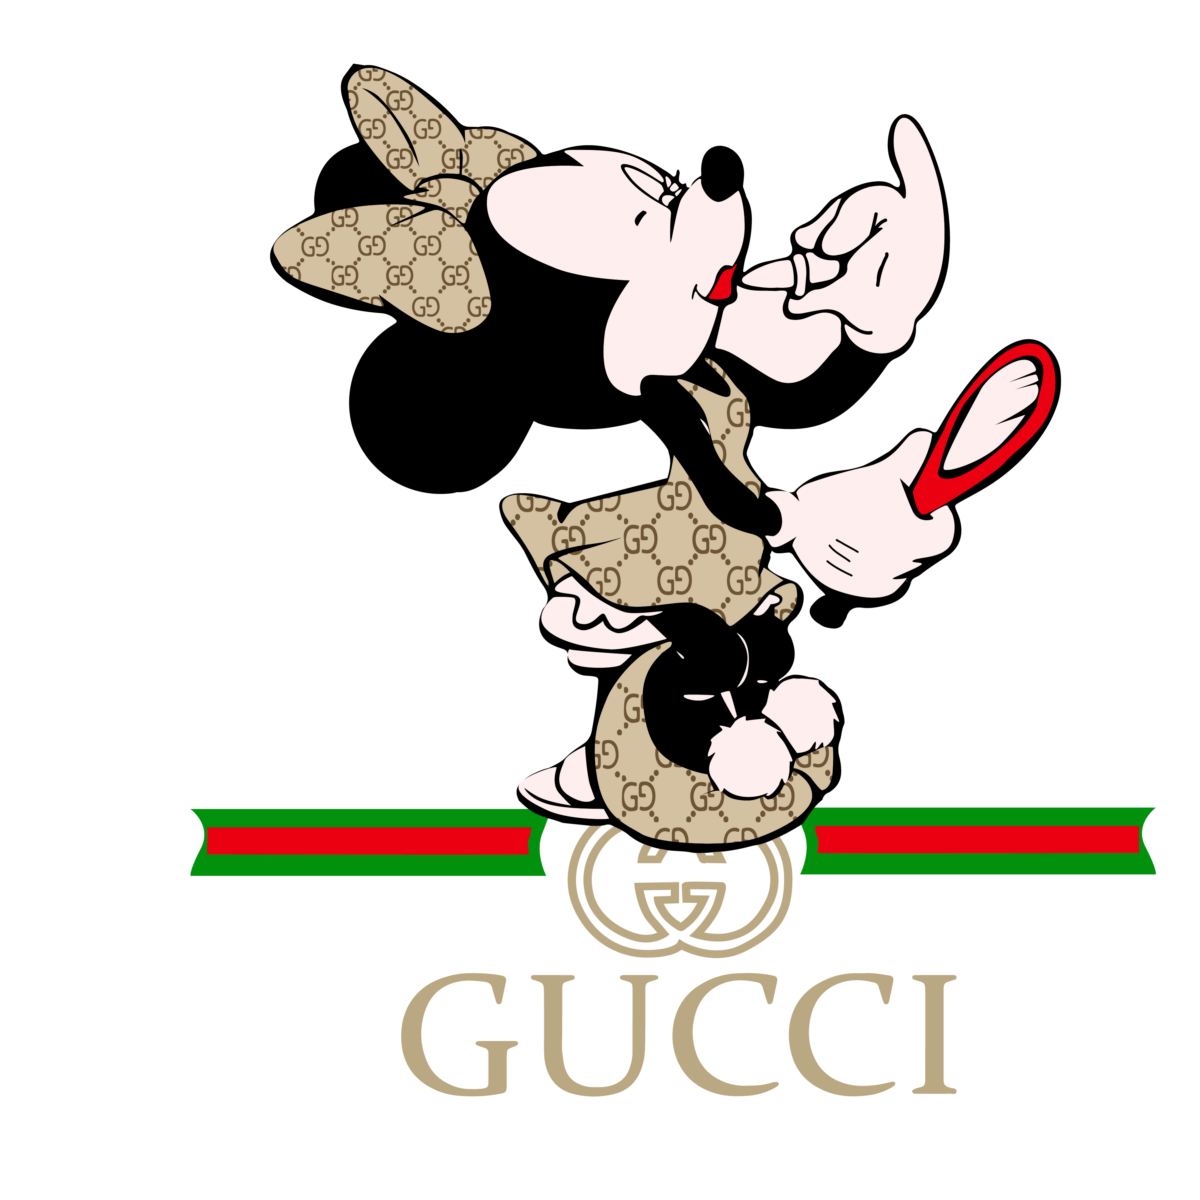 Gucci Mickey Svg